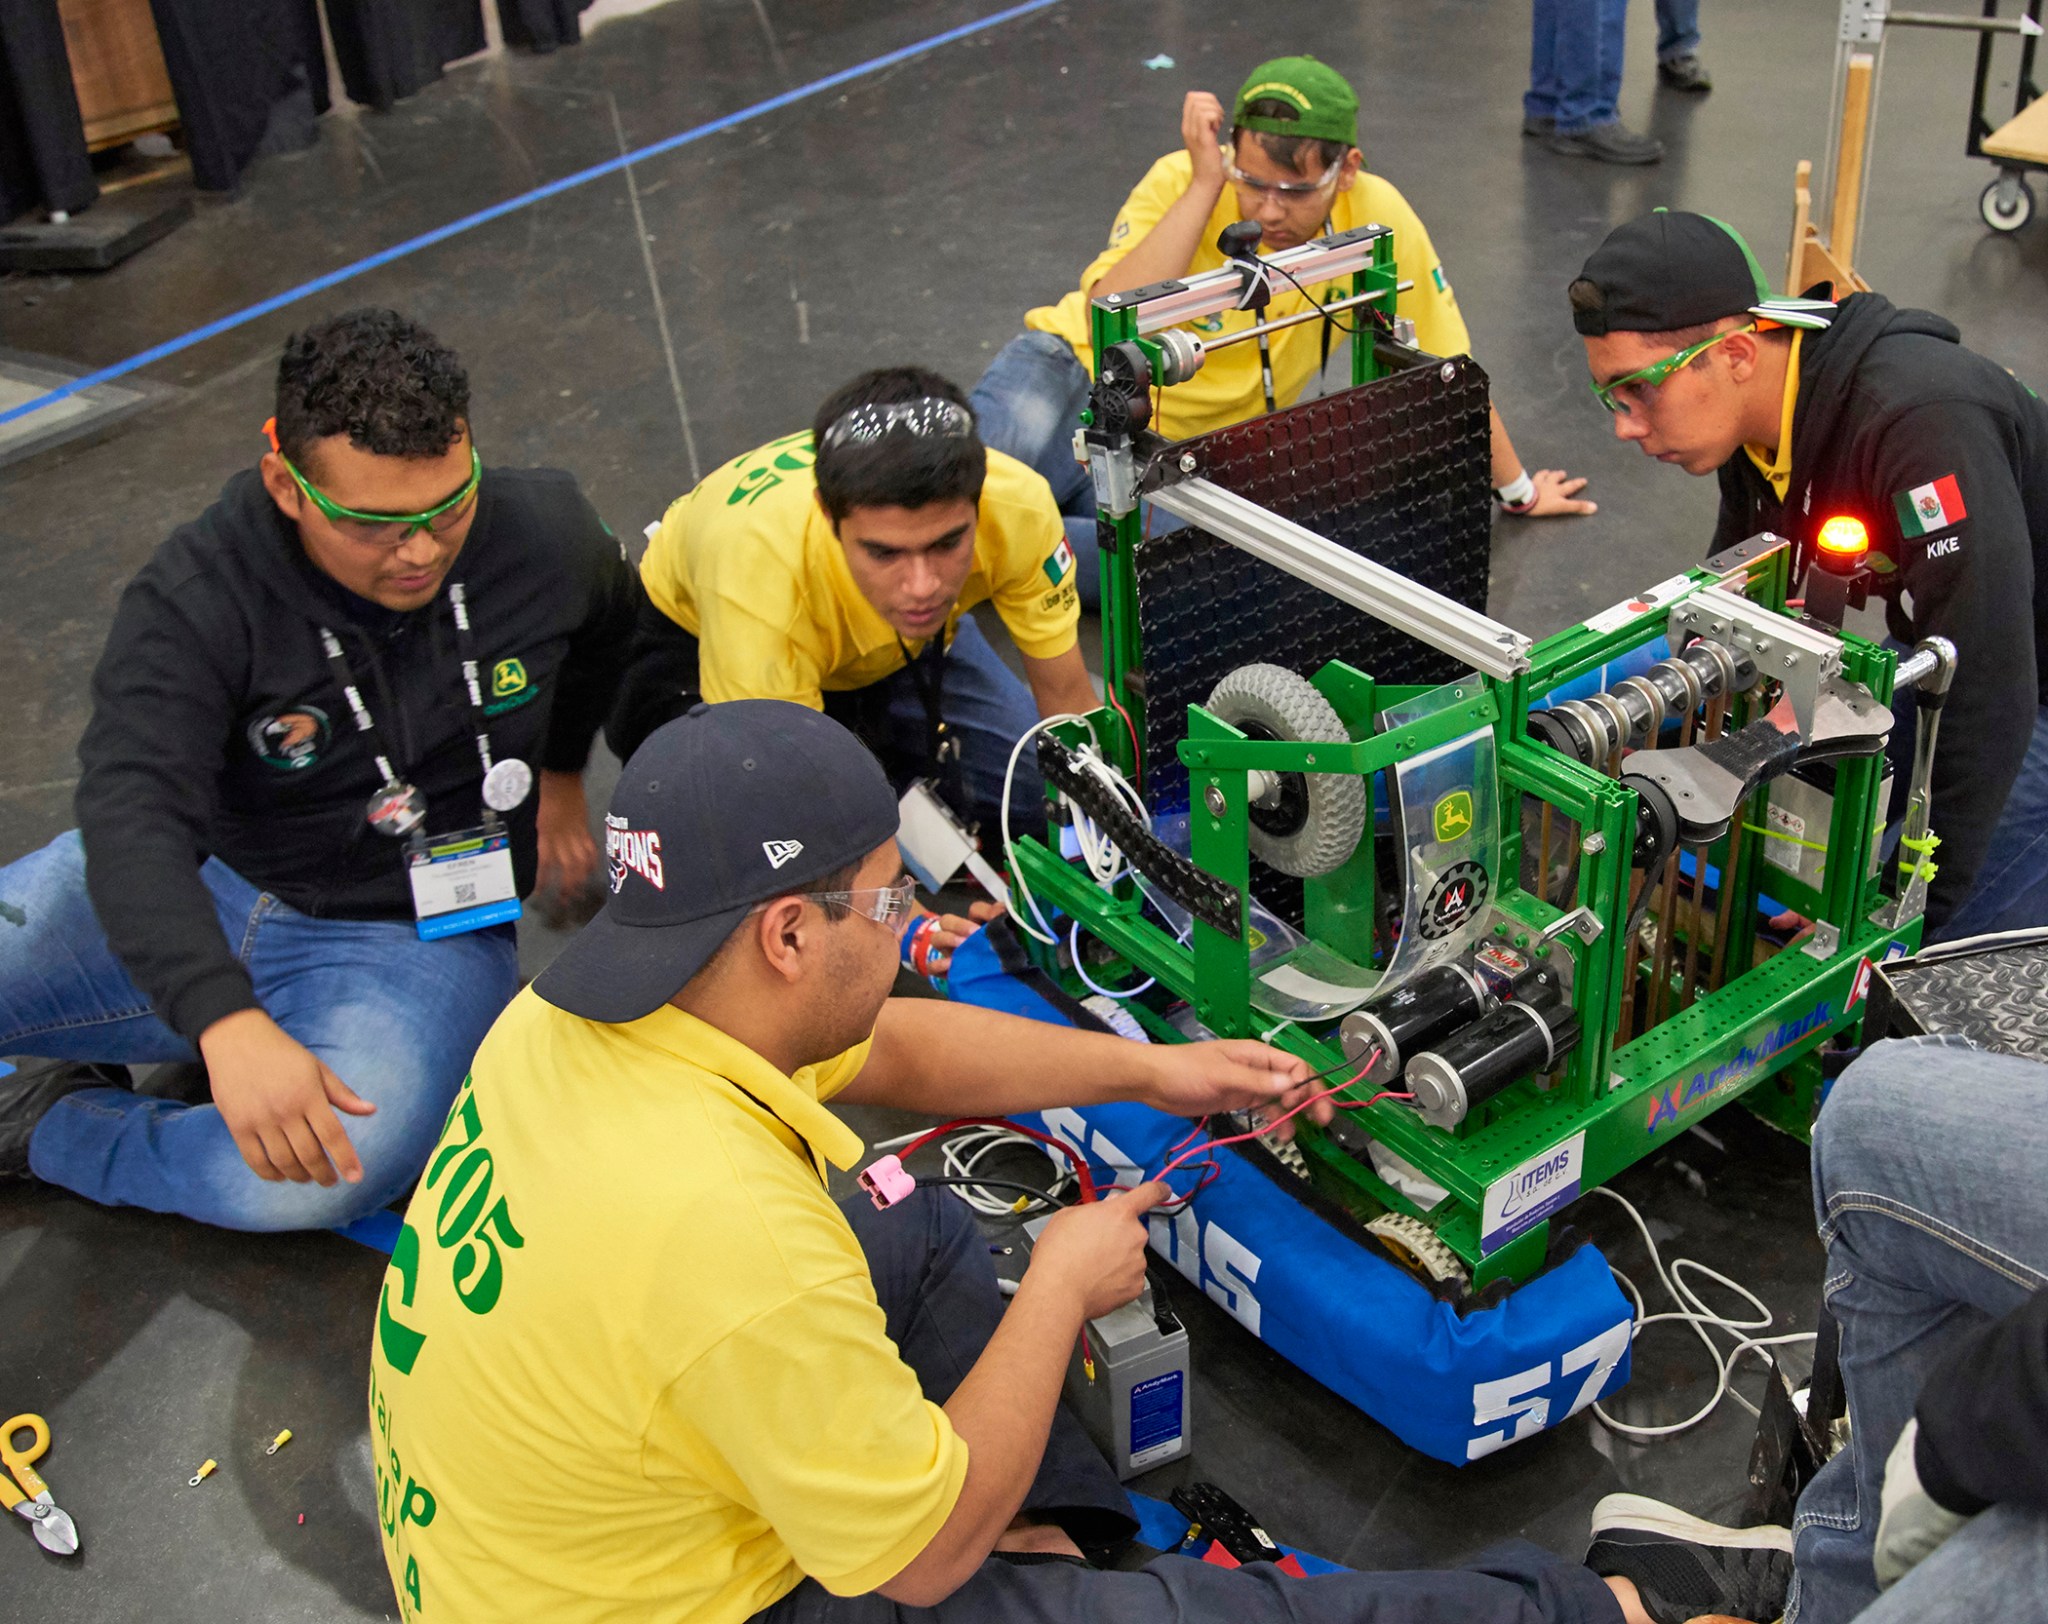 A high school robotics team prepares for regional competition.